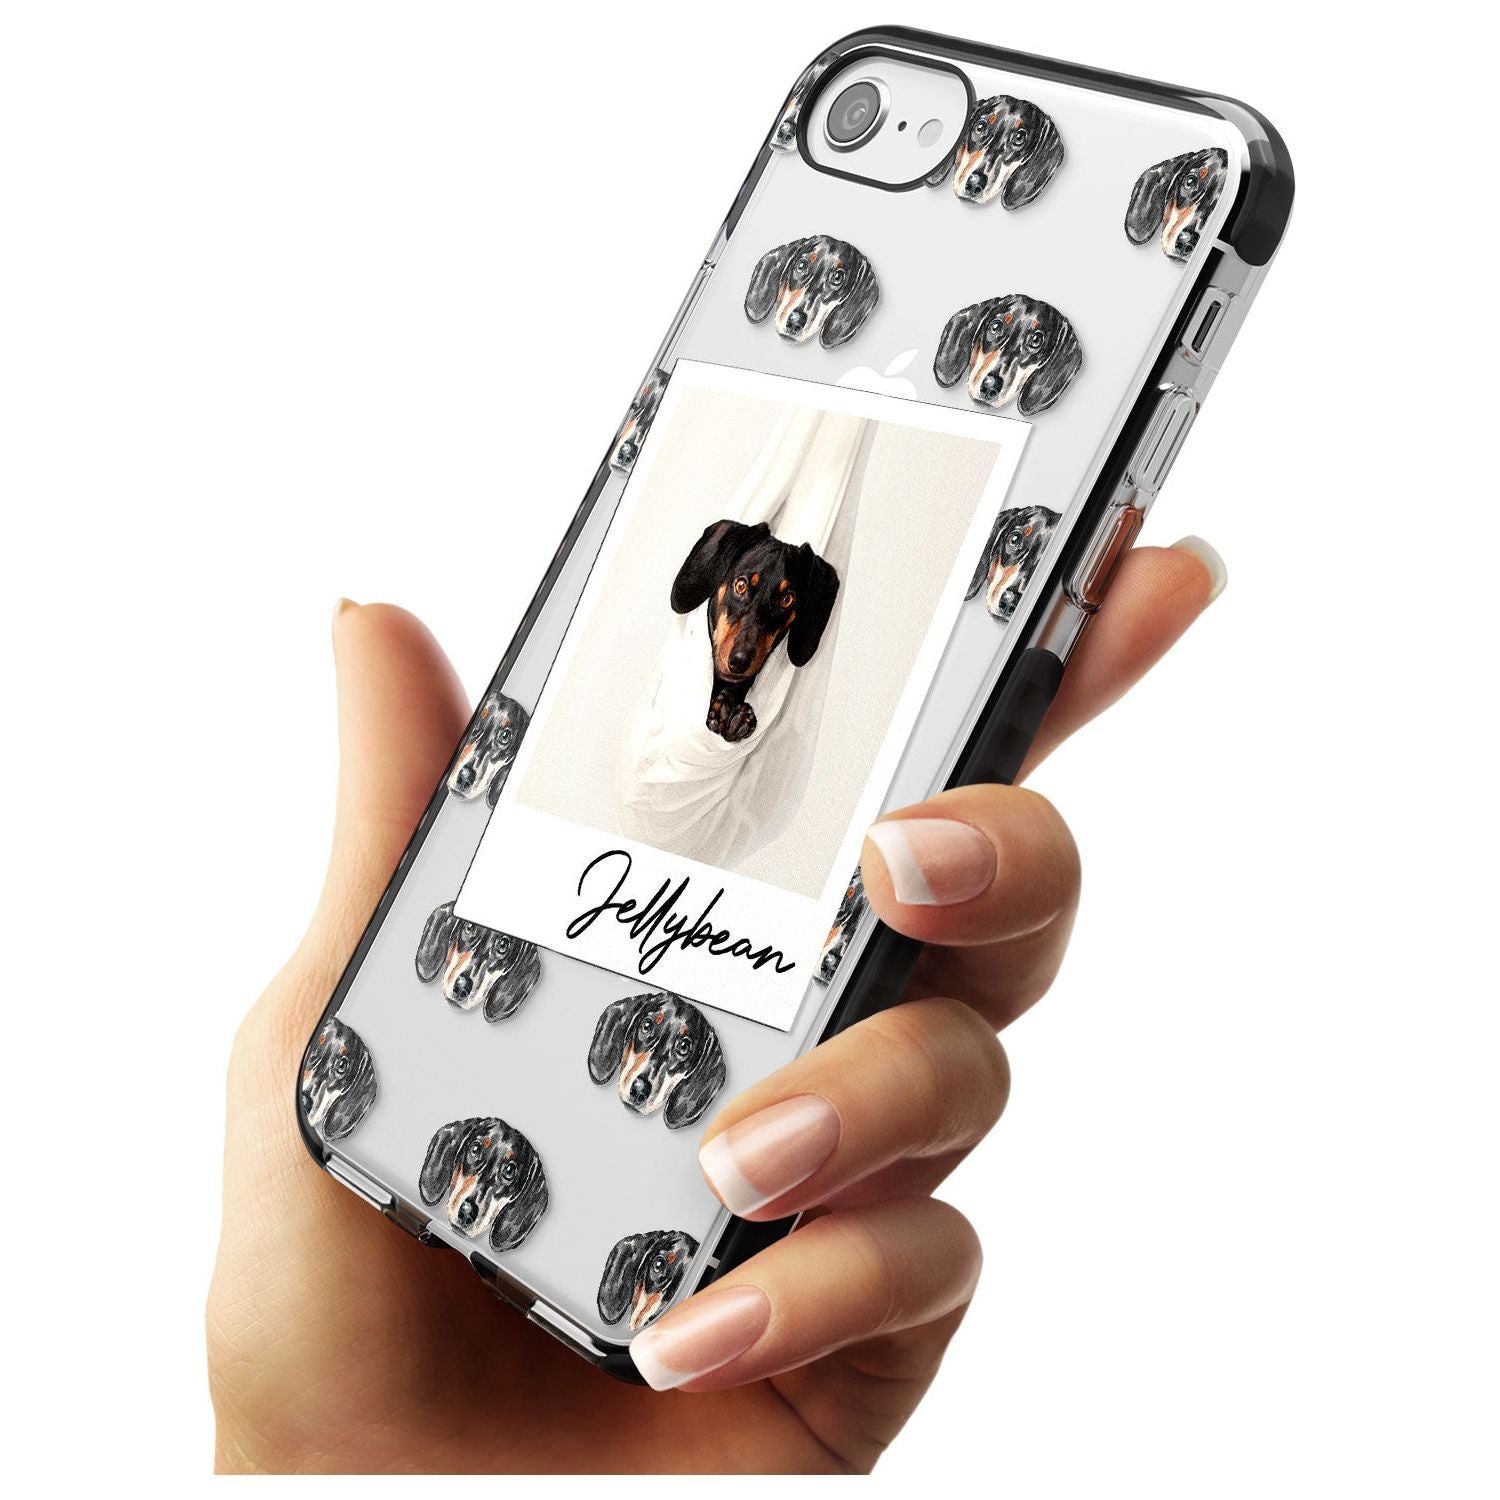 Dachshund, Black- Custom Dog Photo Pink Fade Impact Phone Case for iPhone SE 8 7 Plus